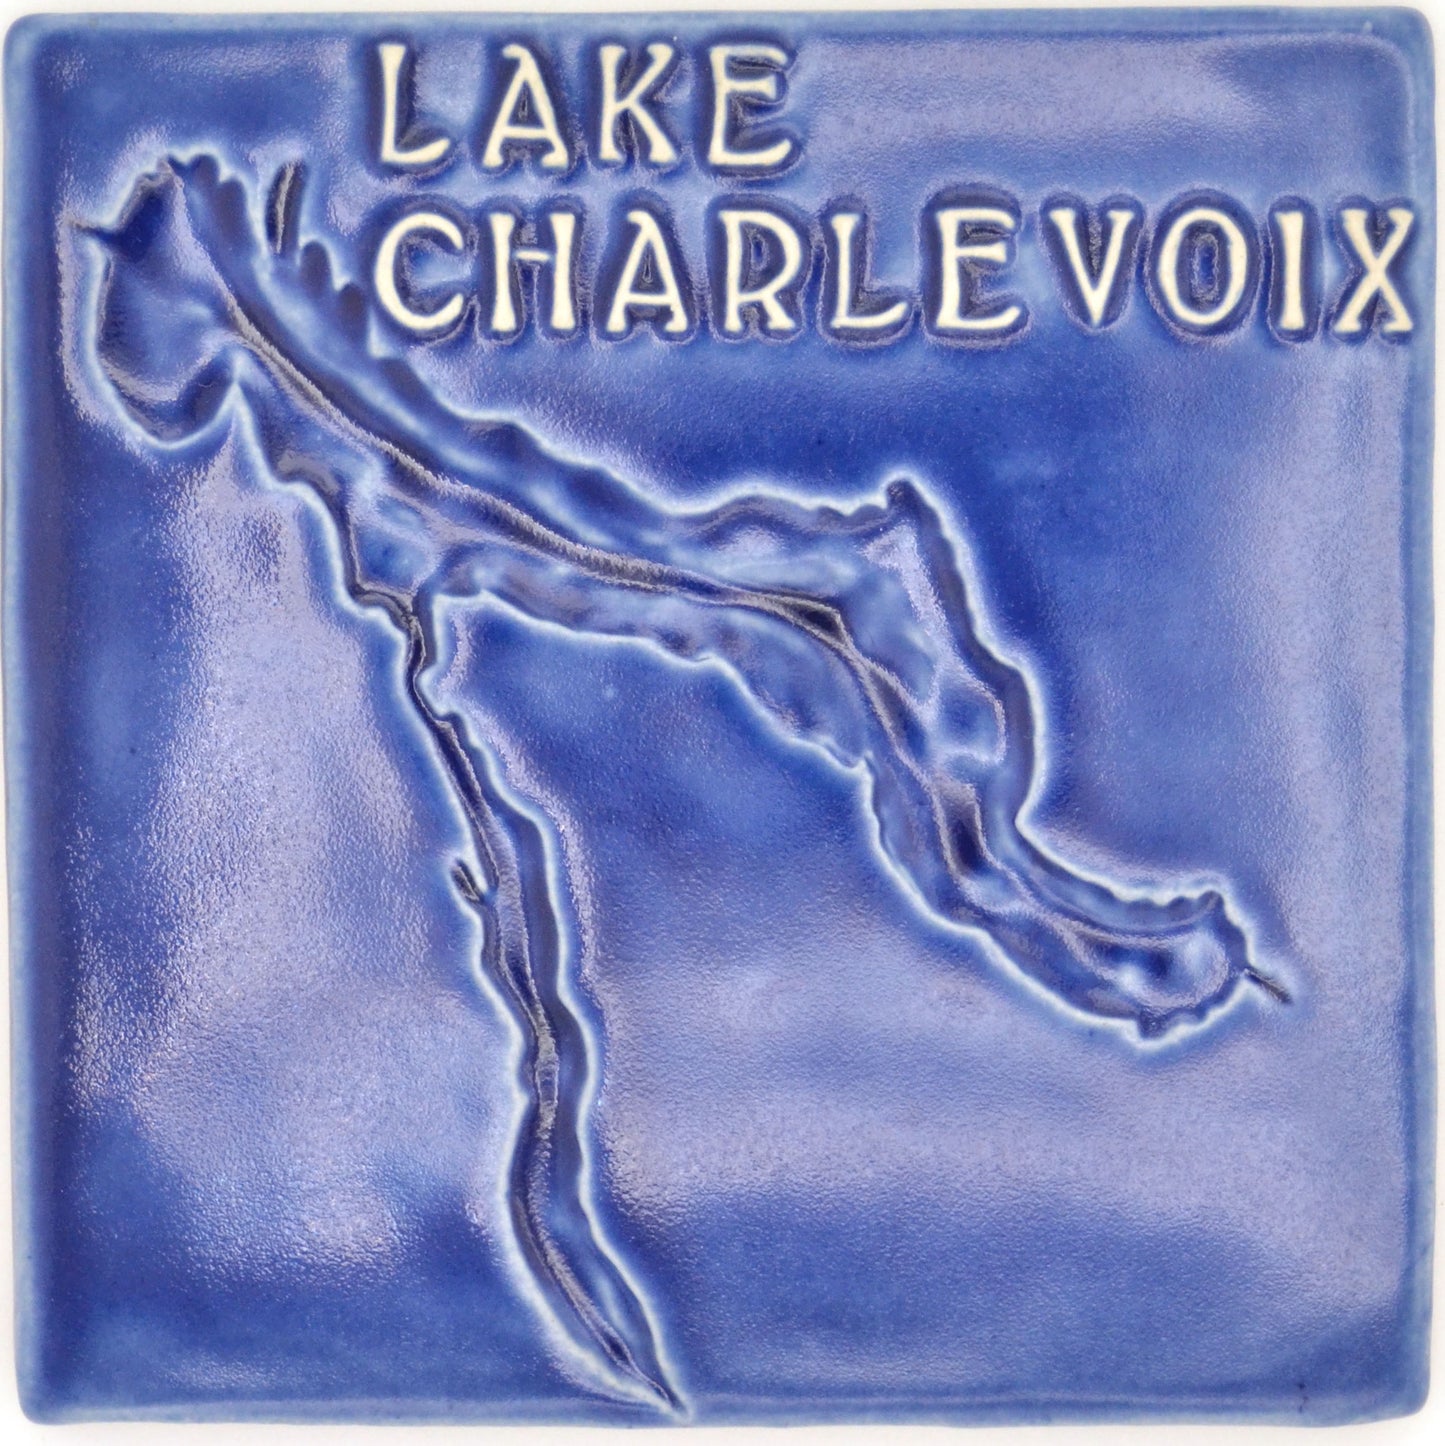 6x6 lake charlevoix tile blue